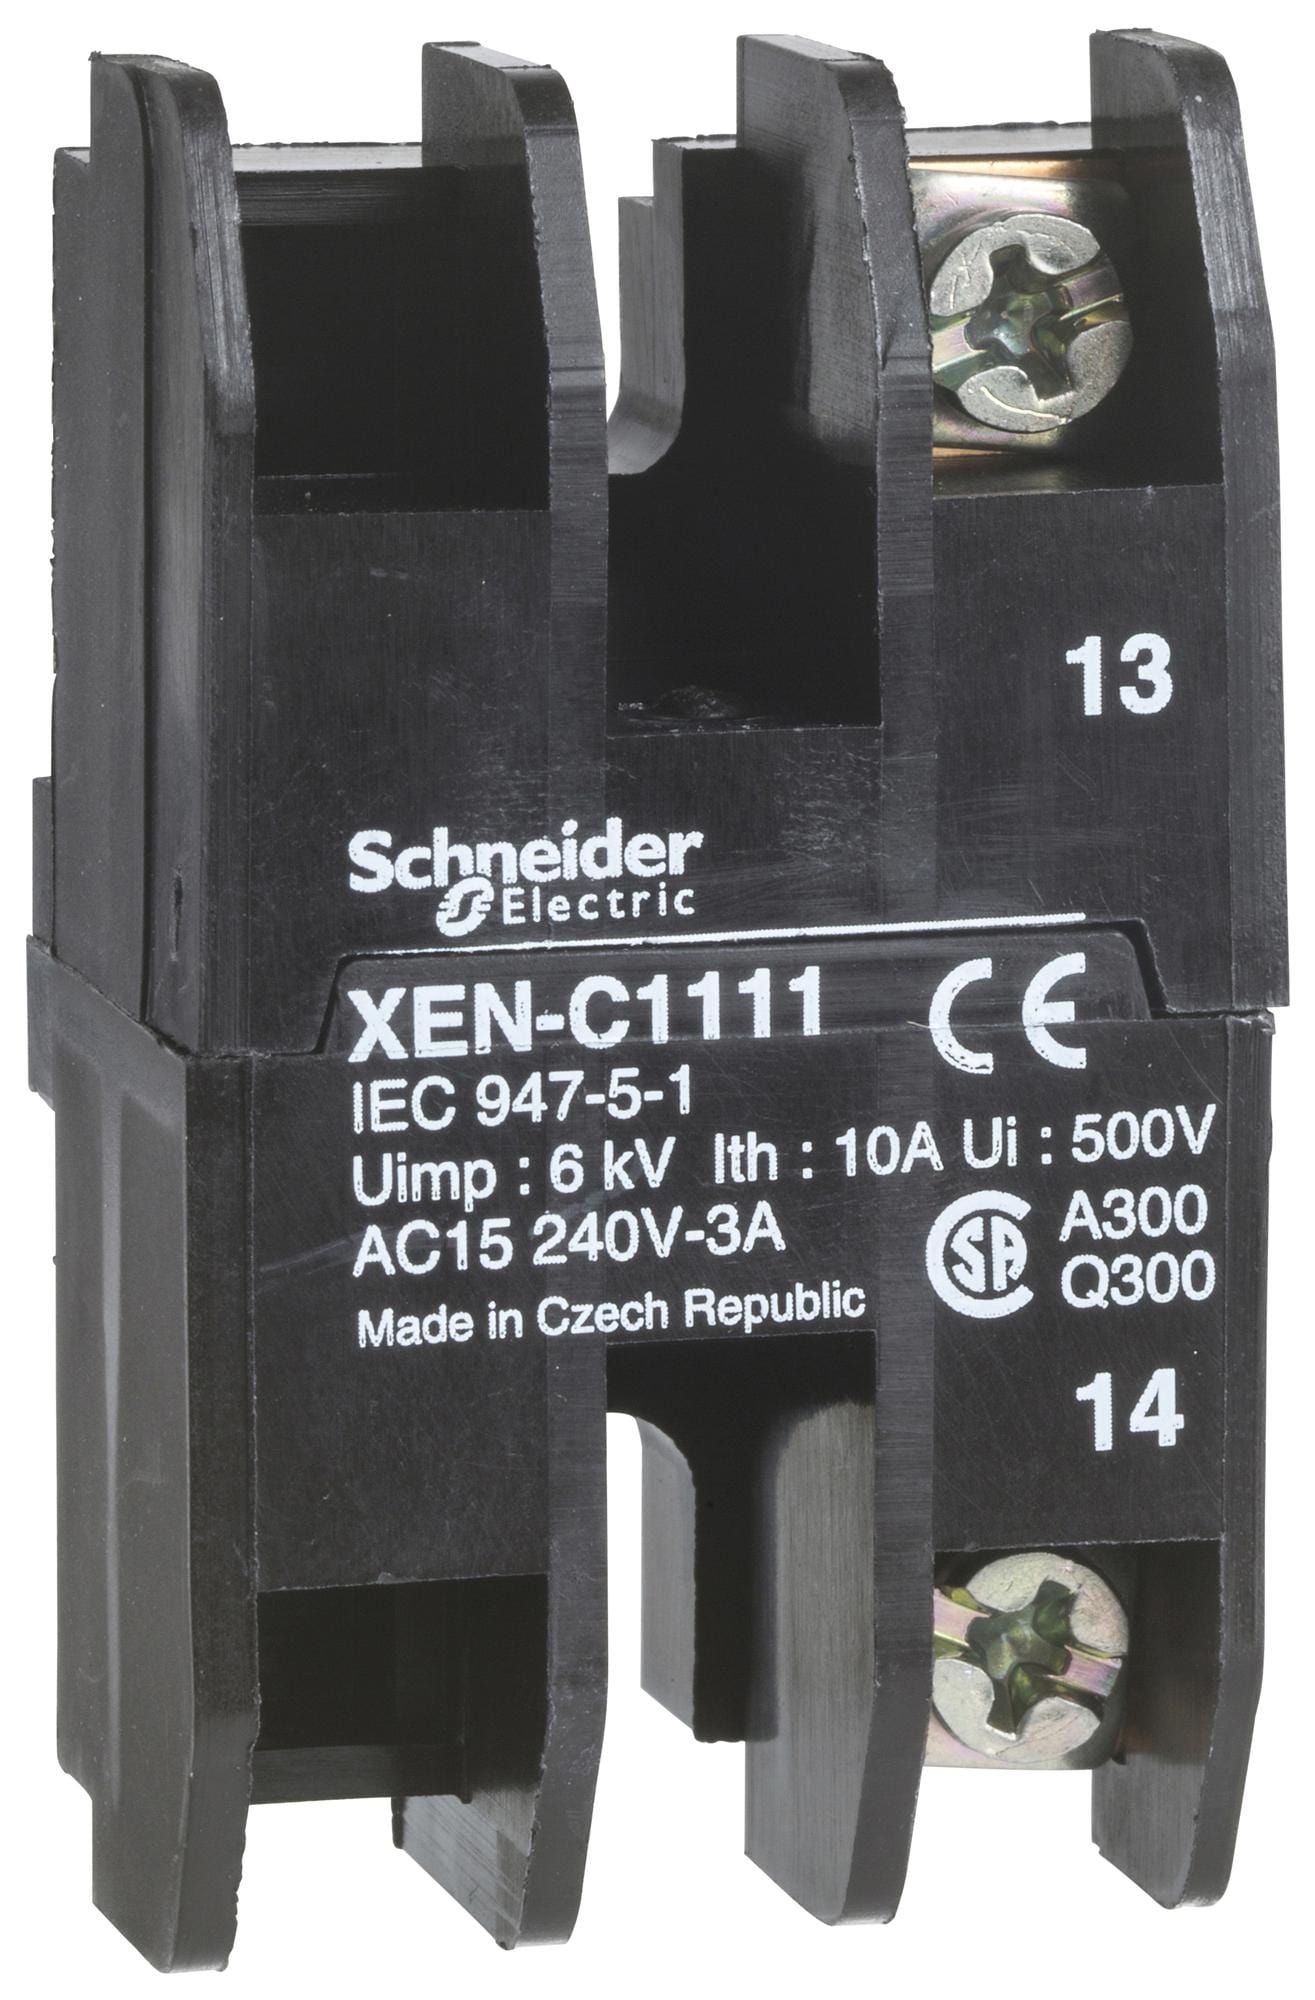 SCHNEIDER ELECTRIC Contact Blocks XENC1151 CONTACT BLOCK SCHNEIDER ELECTRIC 3114850 XENC1151